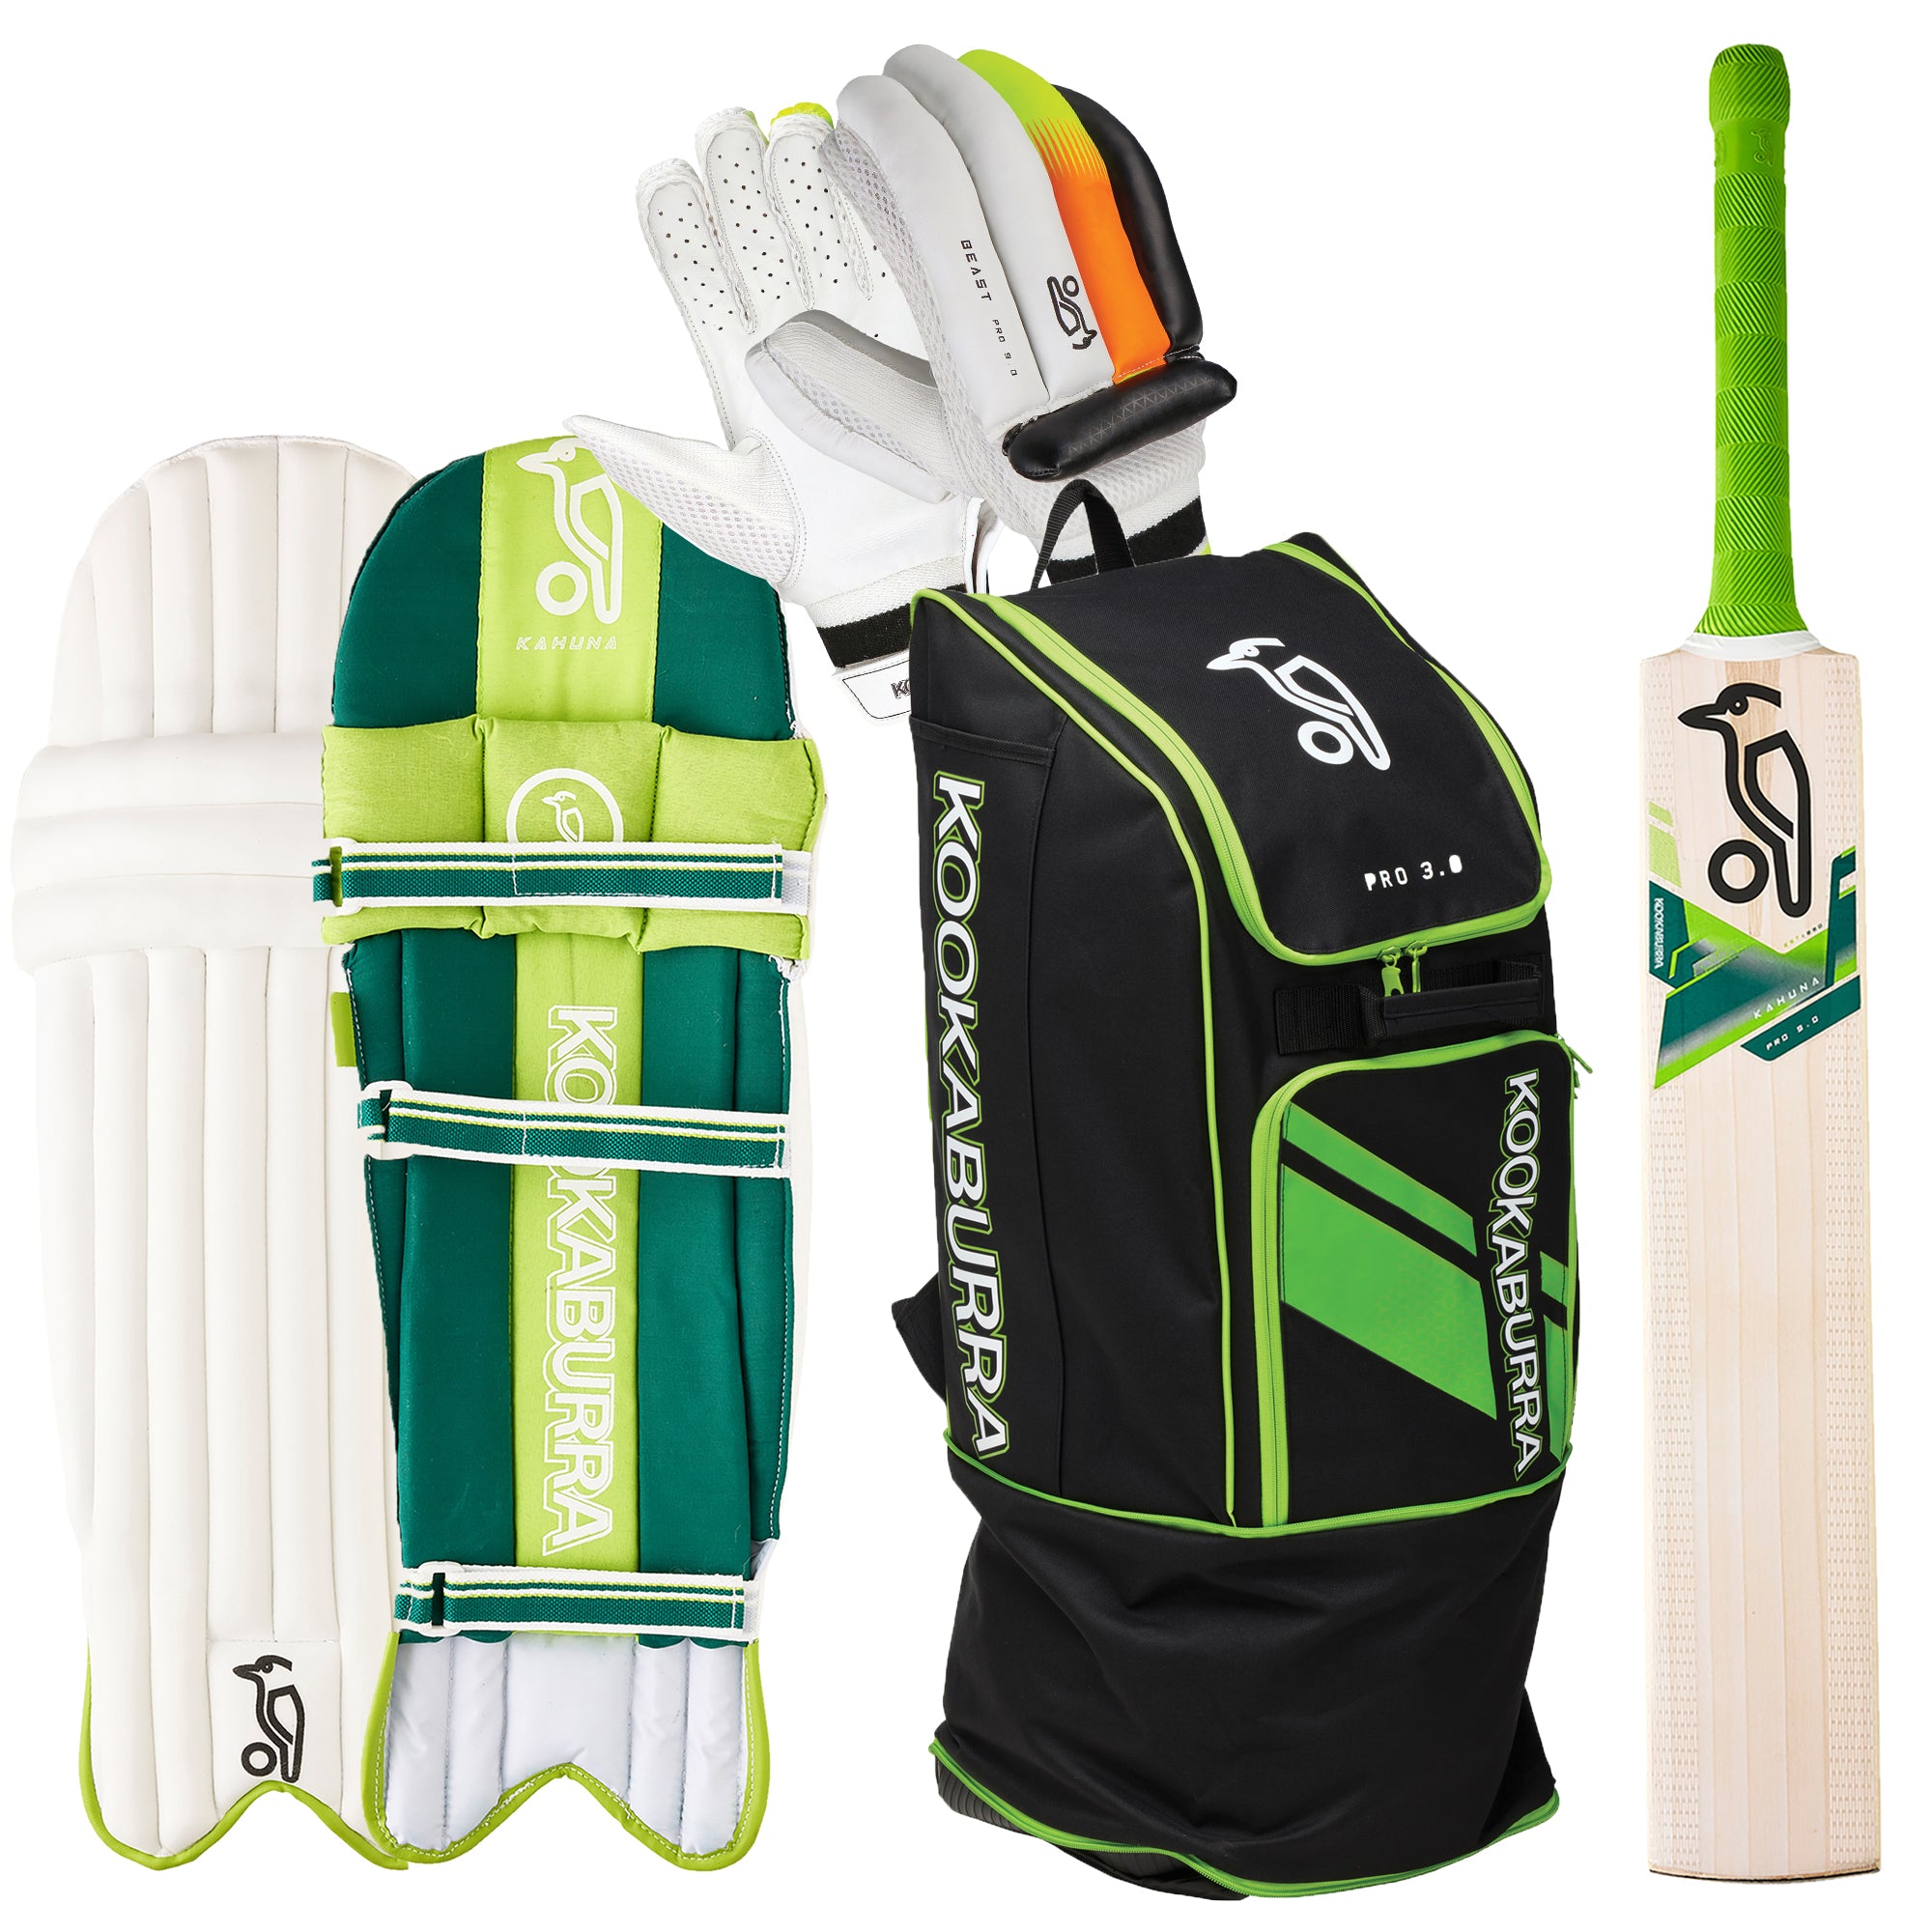 Kookaburra 9.0 Junior Cricket Kit